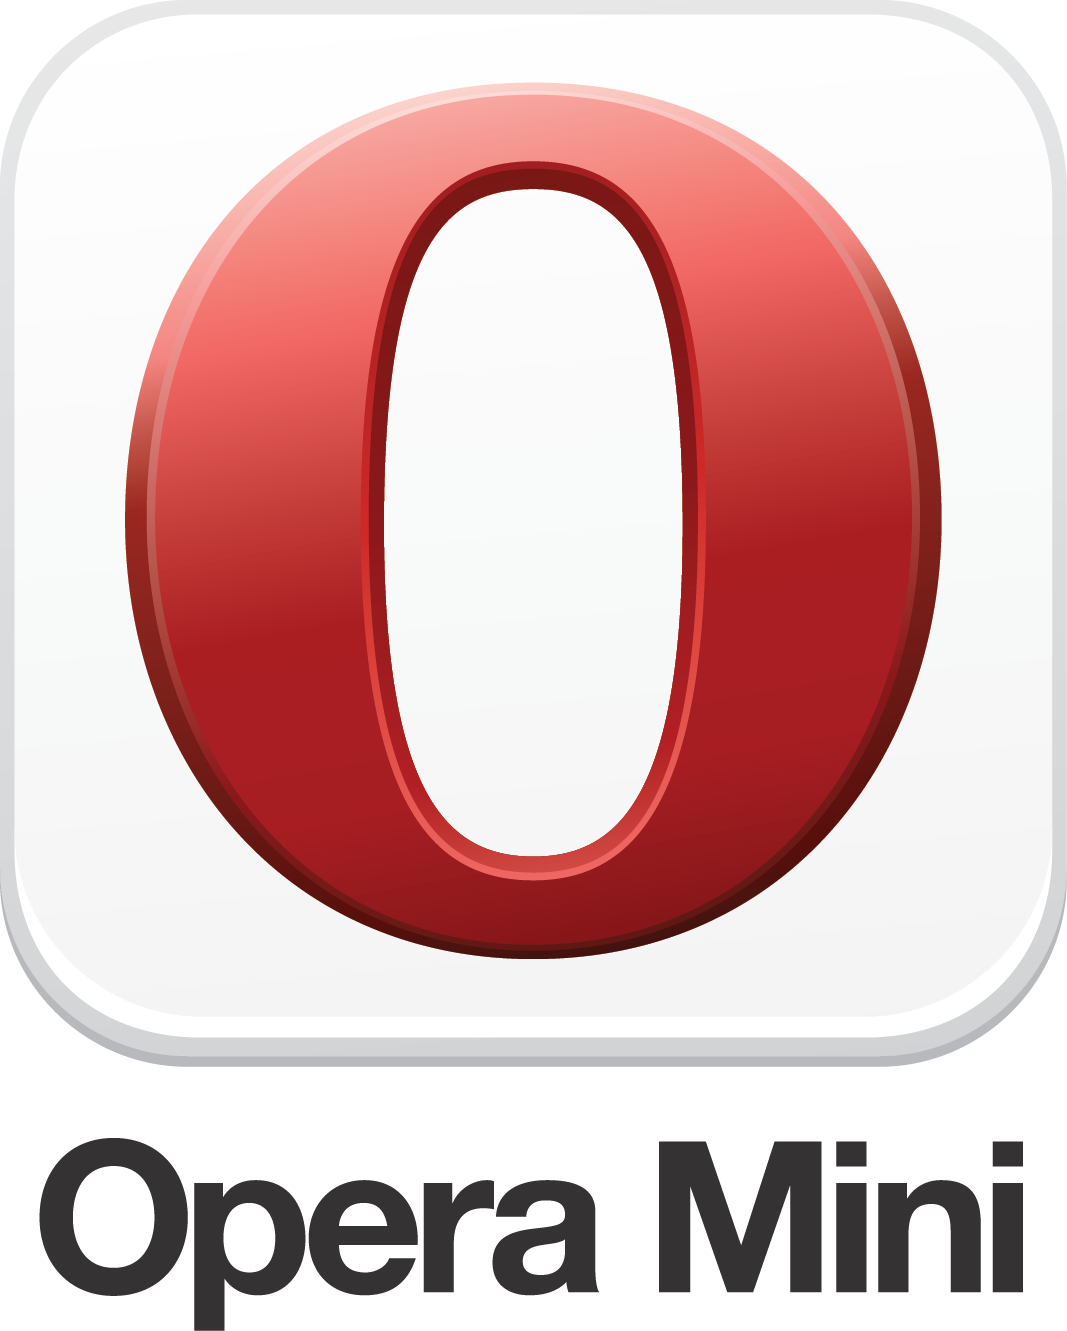 Smart X Opera Mini Unlimited Internet Offer for 15 Pesos ...